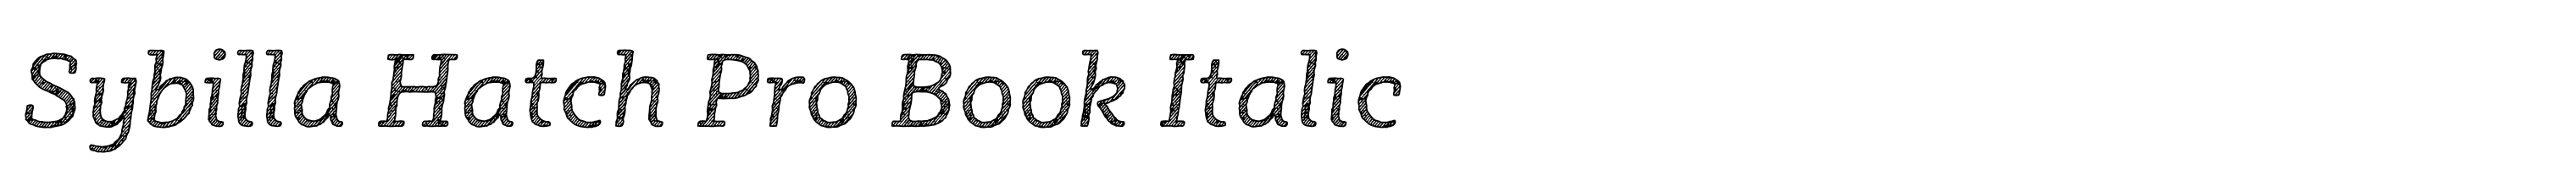 Sybilla Hatch Pro Book Italic